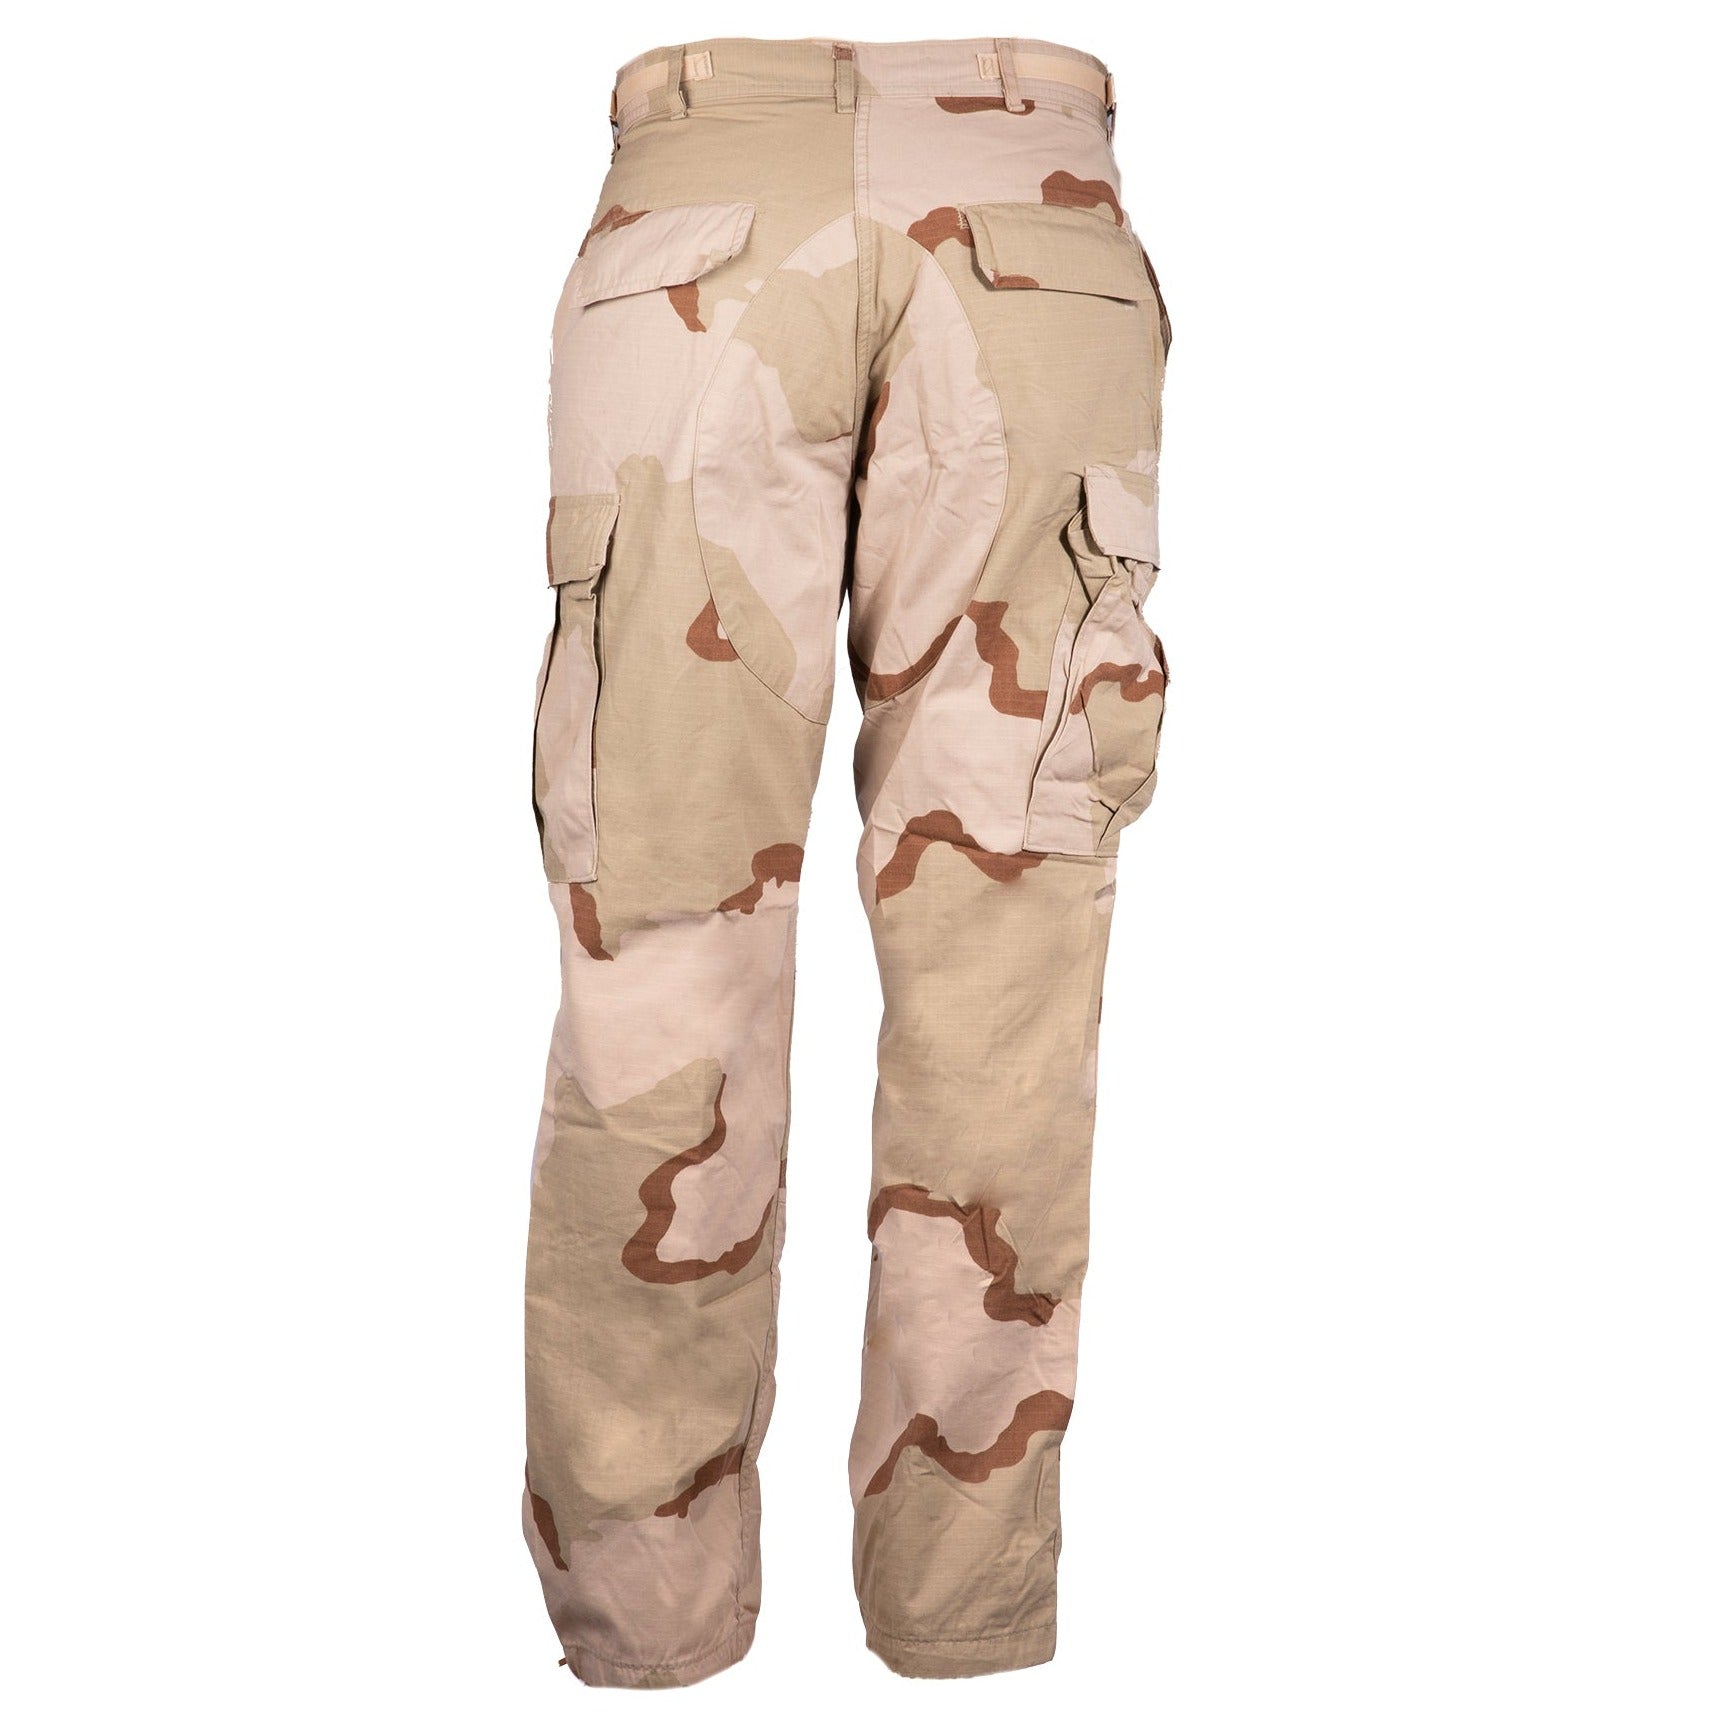 NAVY NWU Type 1 Combat Desert Camouflage BDU Pants | Uniform Trading ...